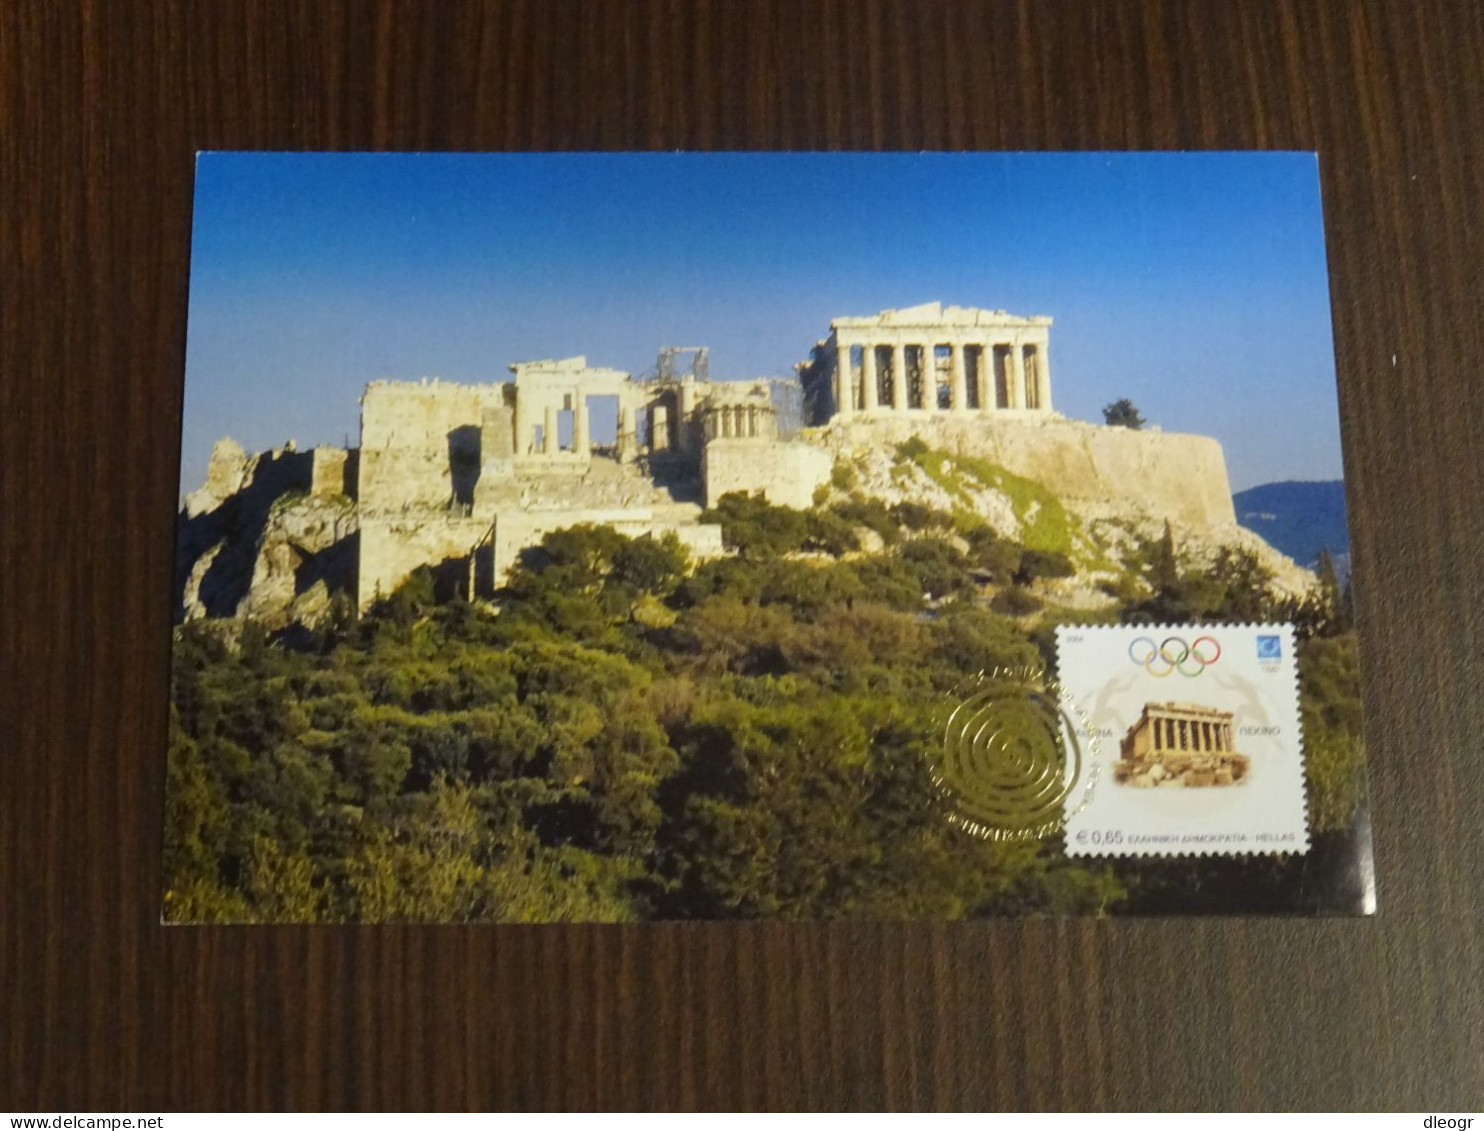 Greece 2004 Athens 2004 Beijing Maximum Card VF - Maximumkarten (MC)